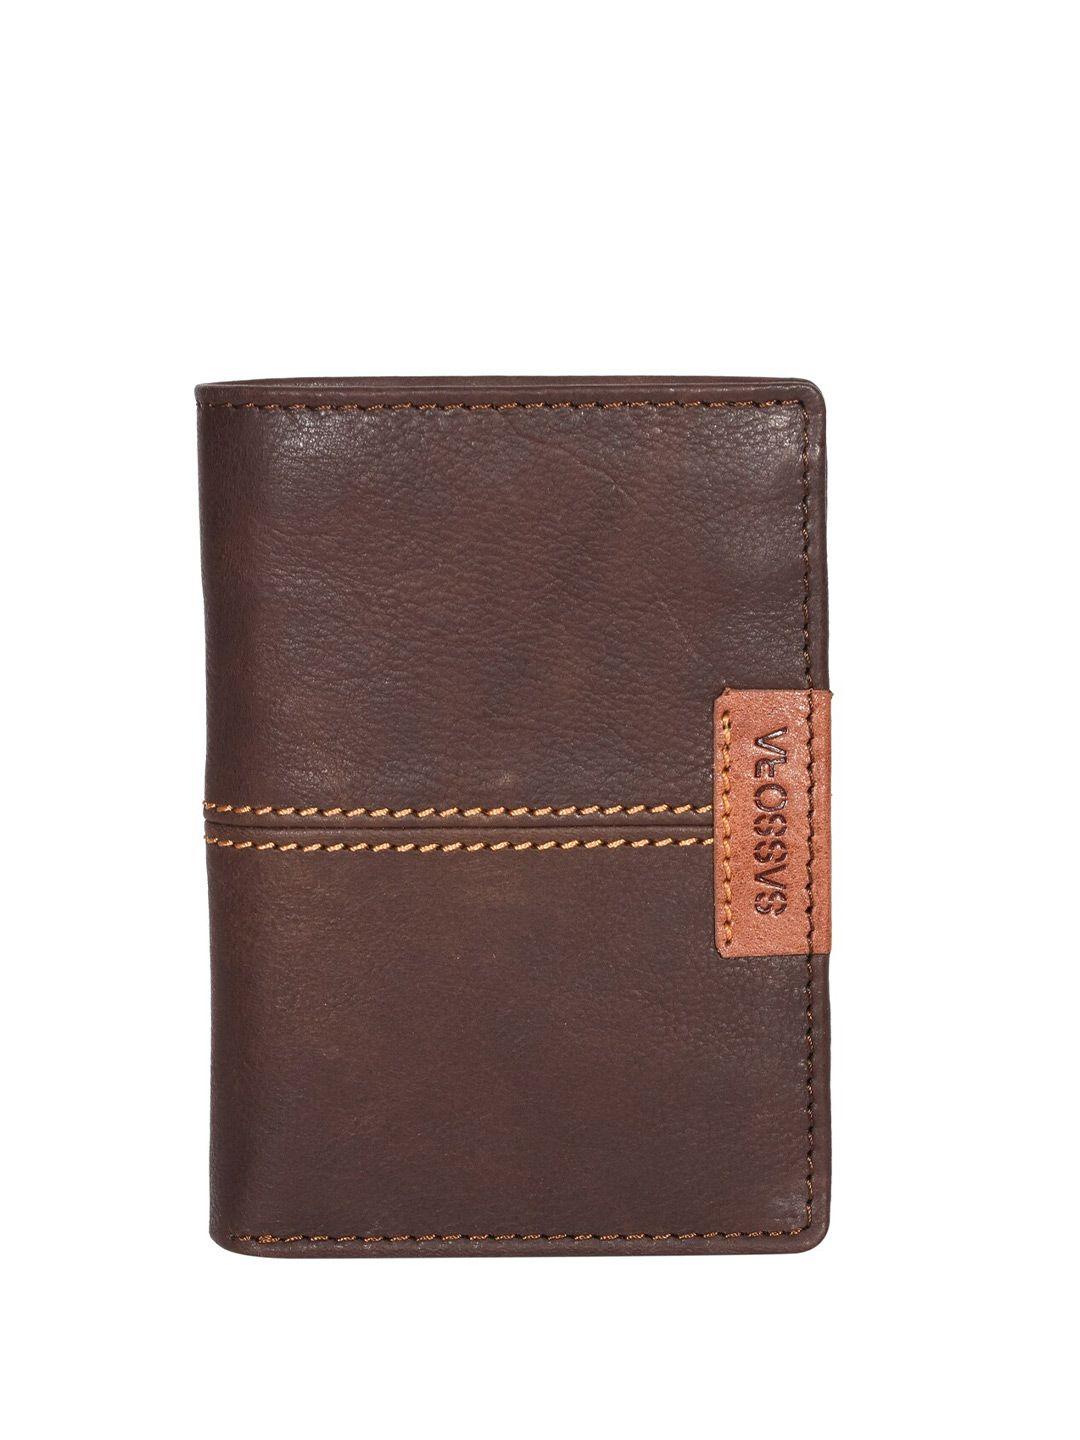 sassora unisex leather rfid protected two fold wallet